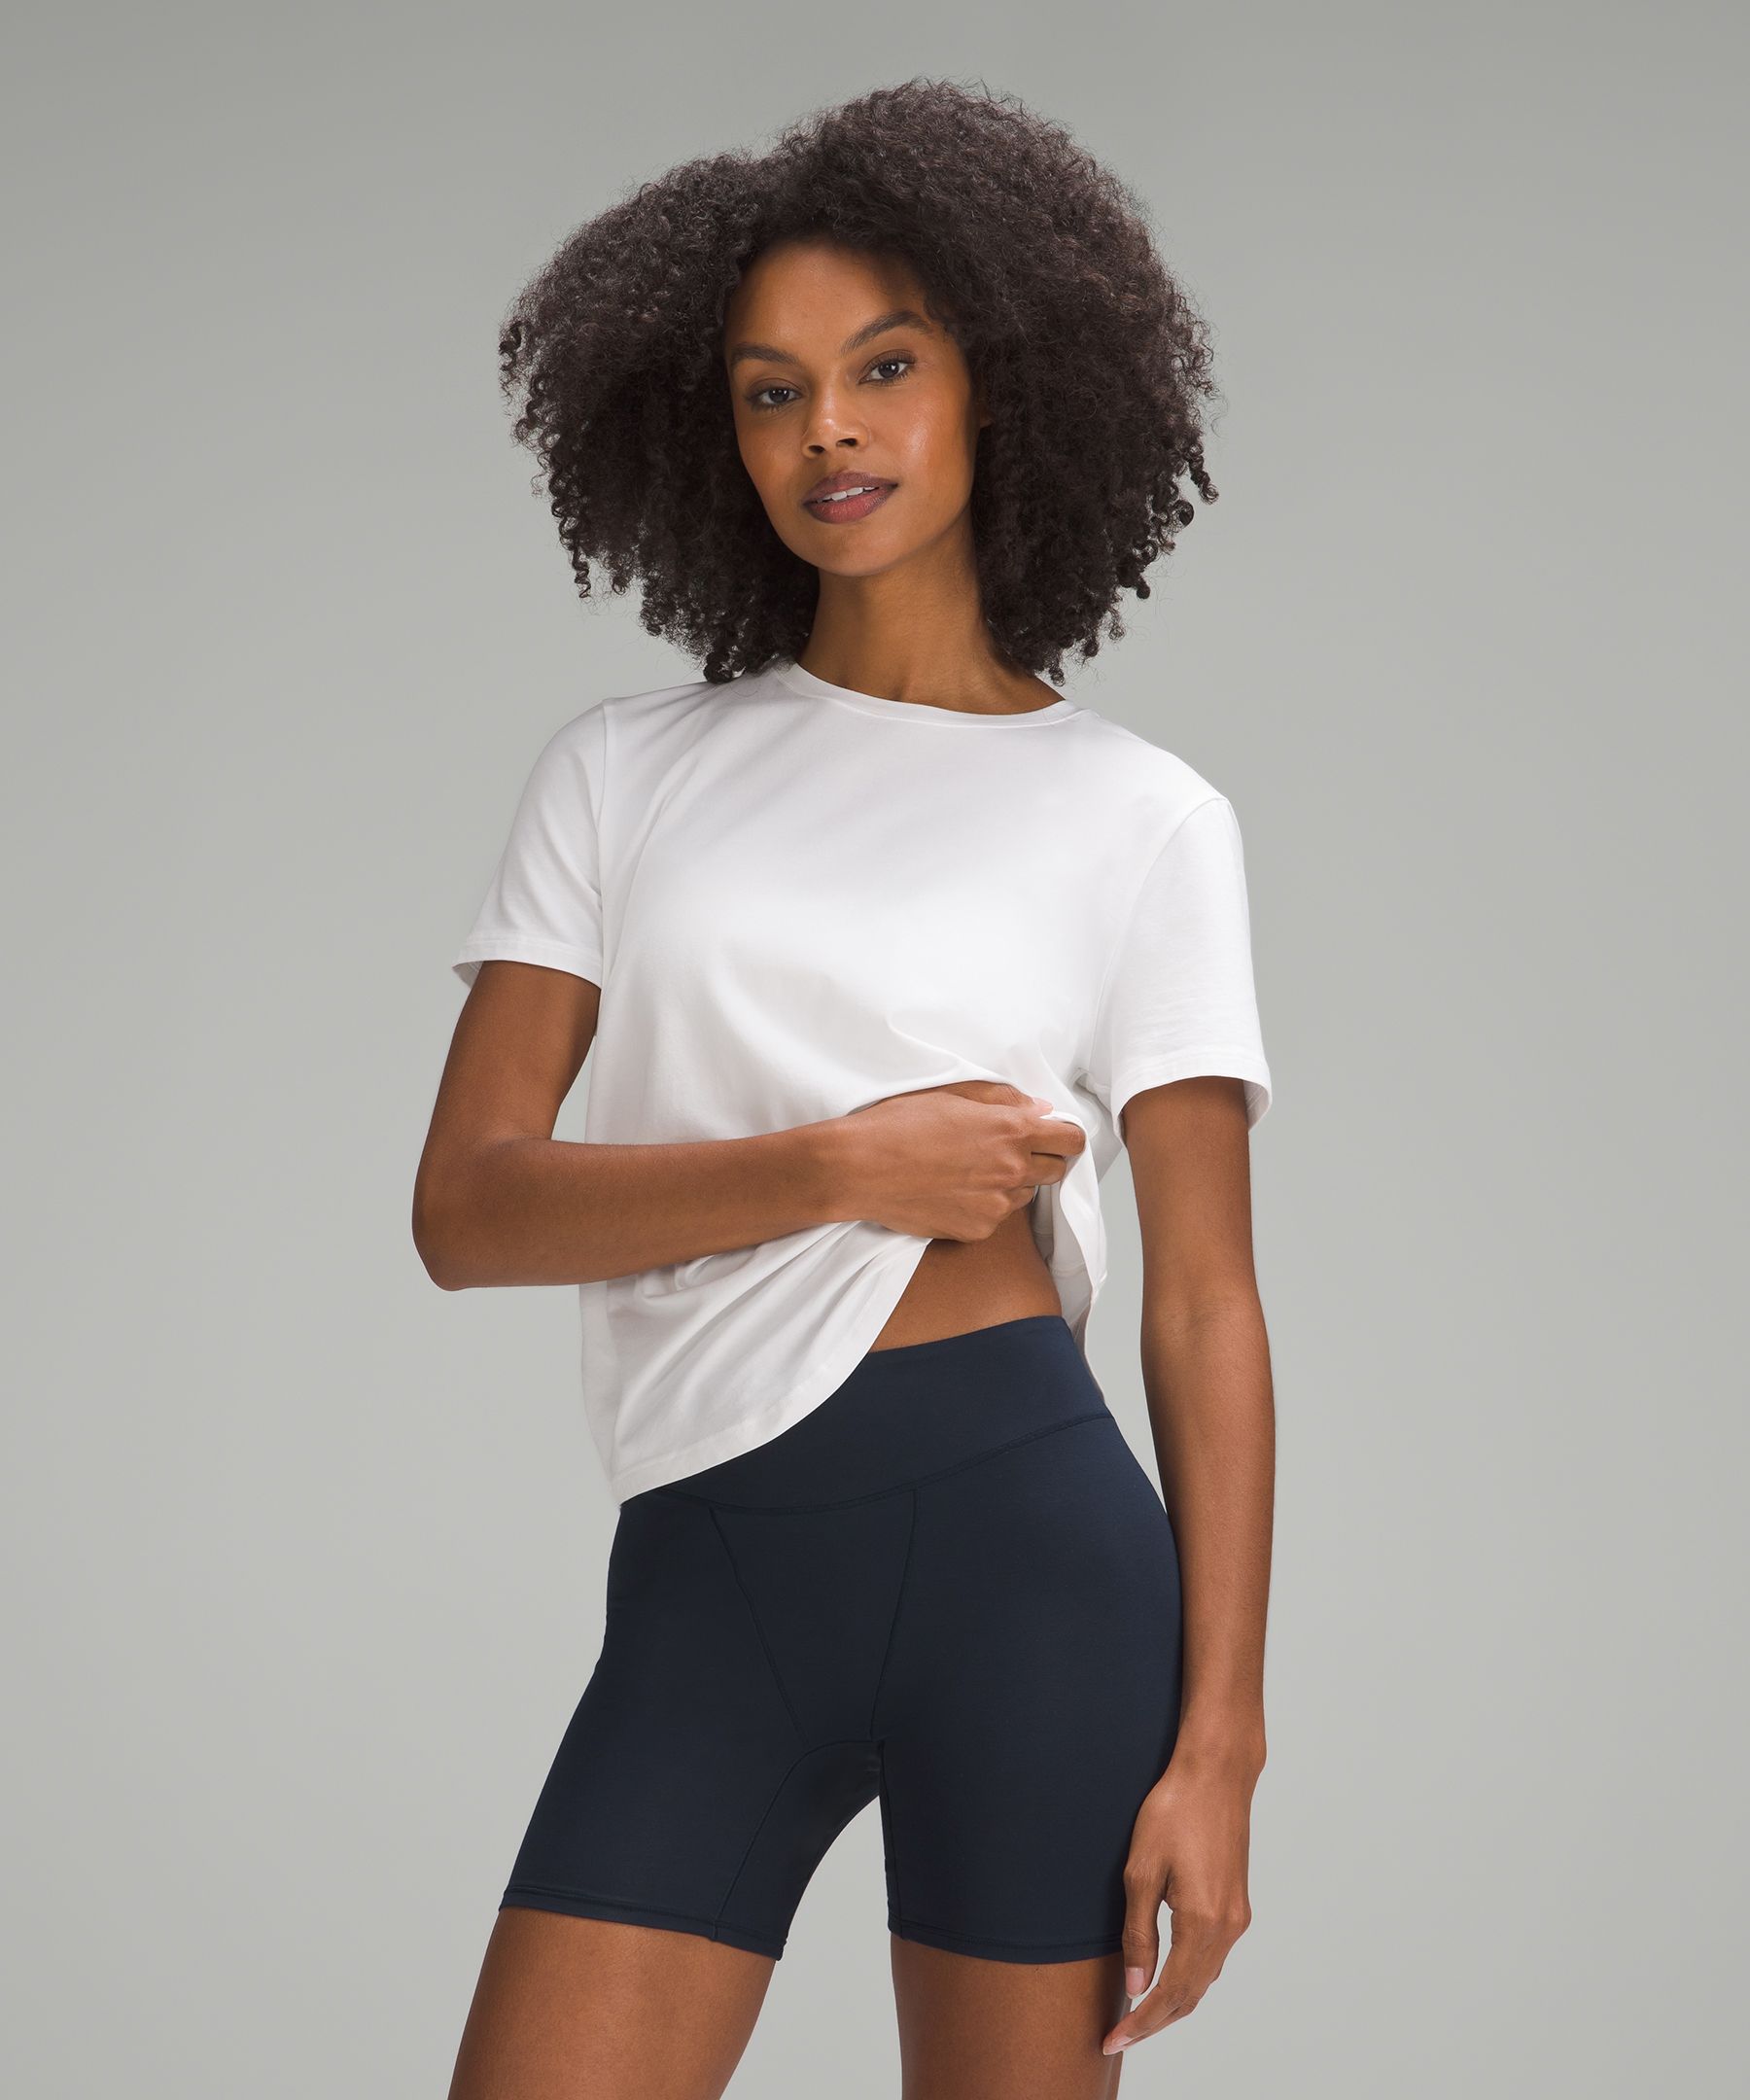 Buy Vinconie Women Slip Shorts for Under Dresses Short Leggings Lace Under  Shorts, 2 Pack Black and White, Medium at